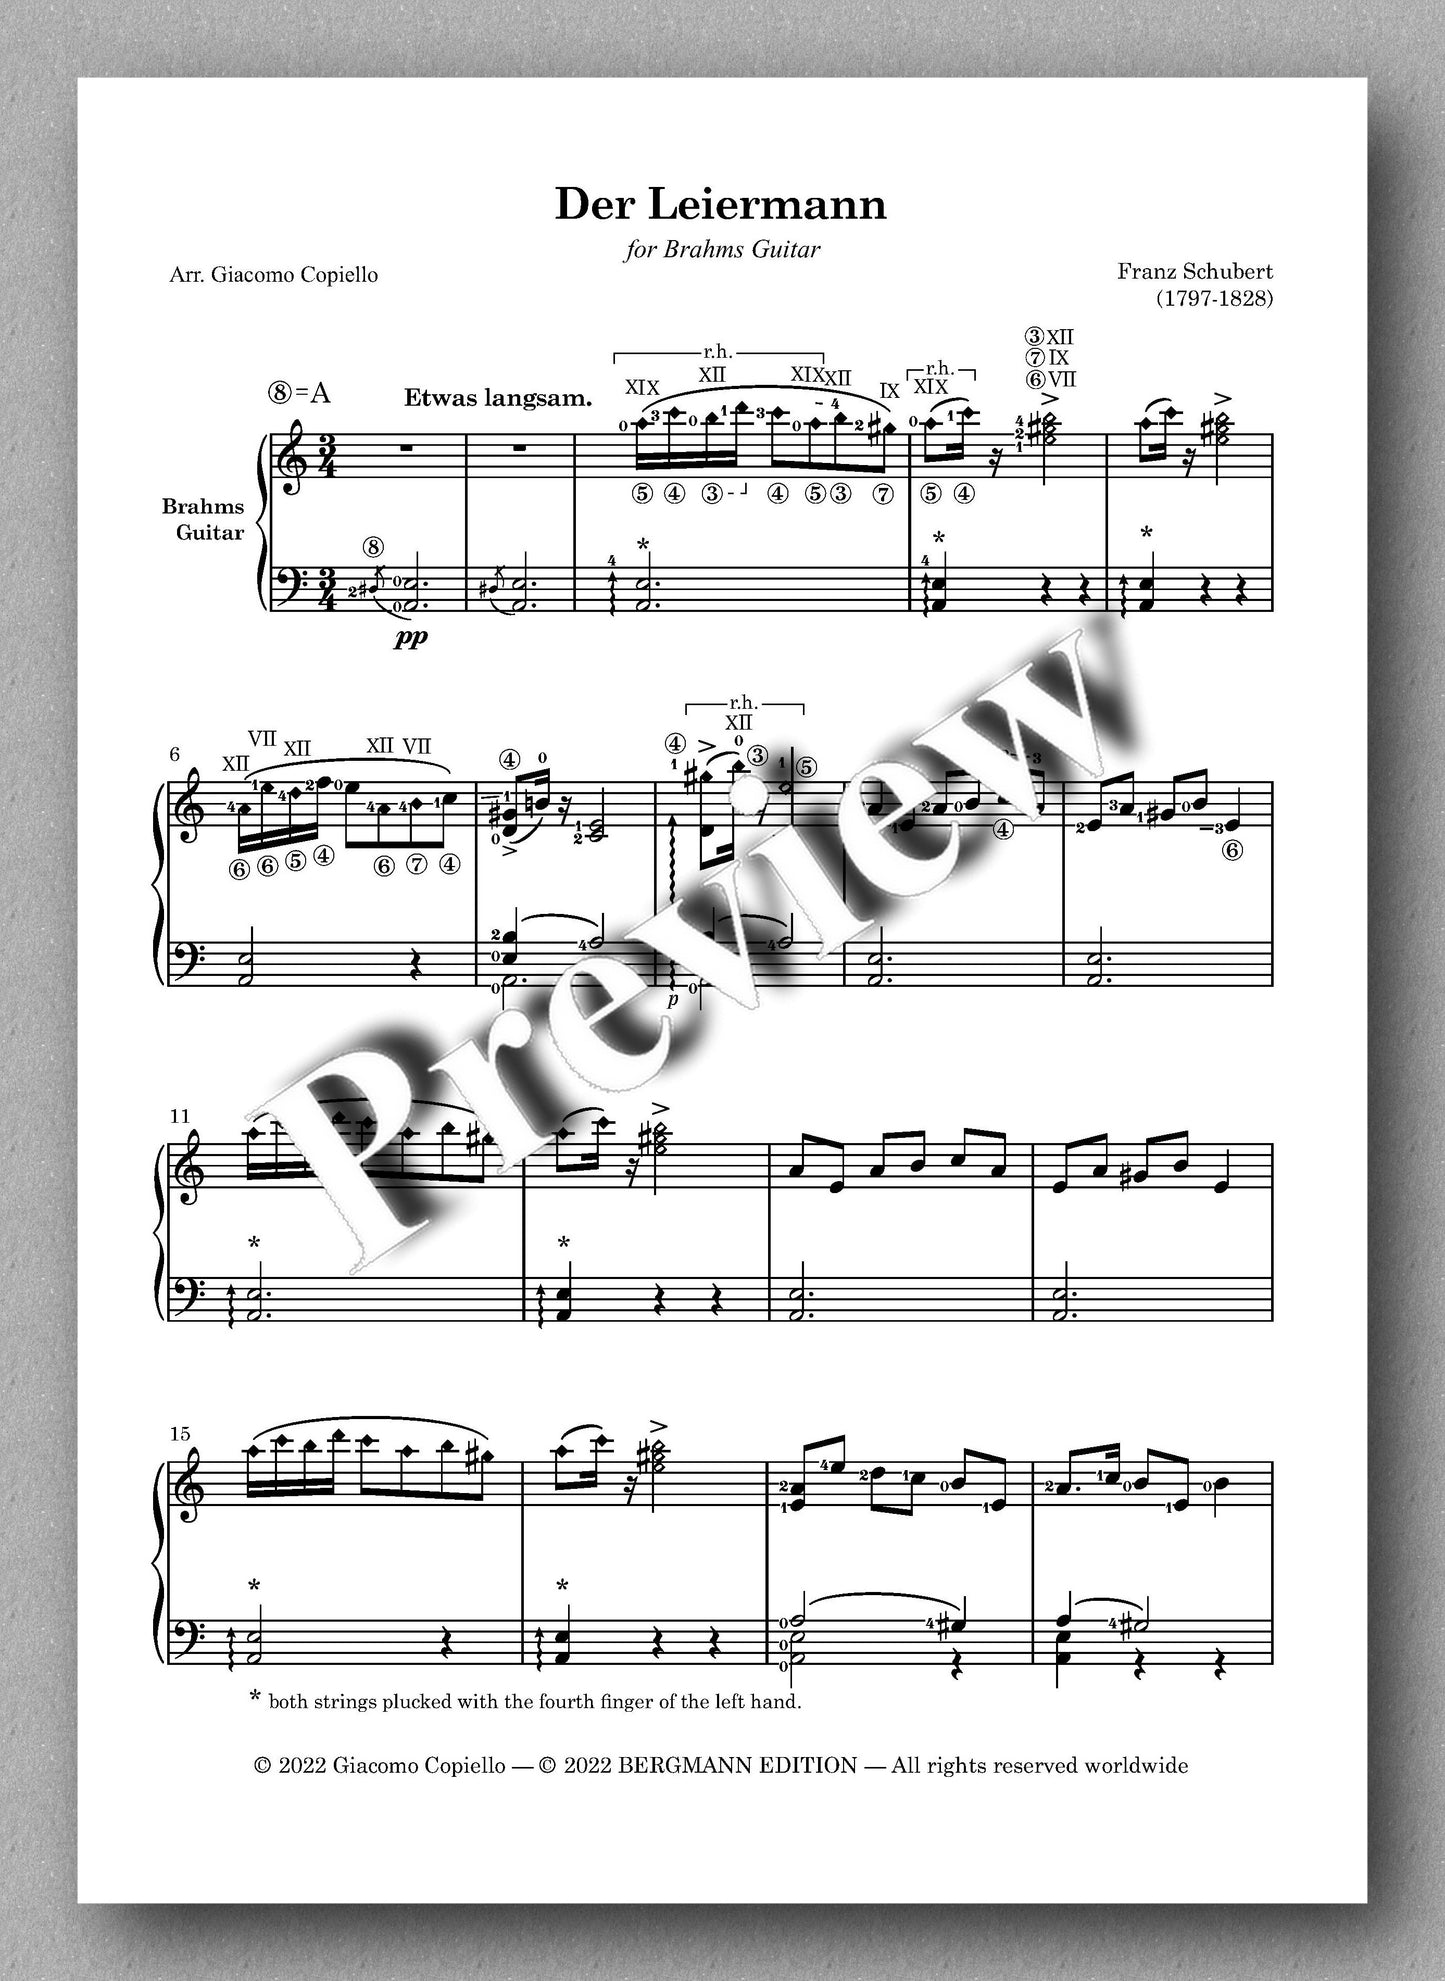 Lieder vol. 1, by Franz Schubert  - preview of the music score 2